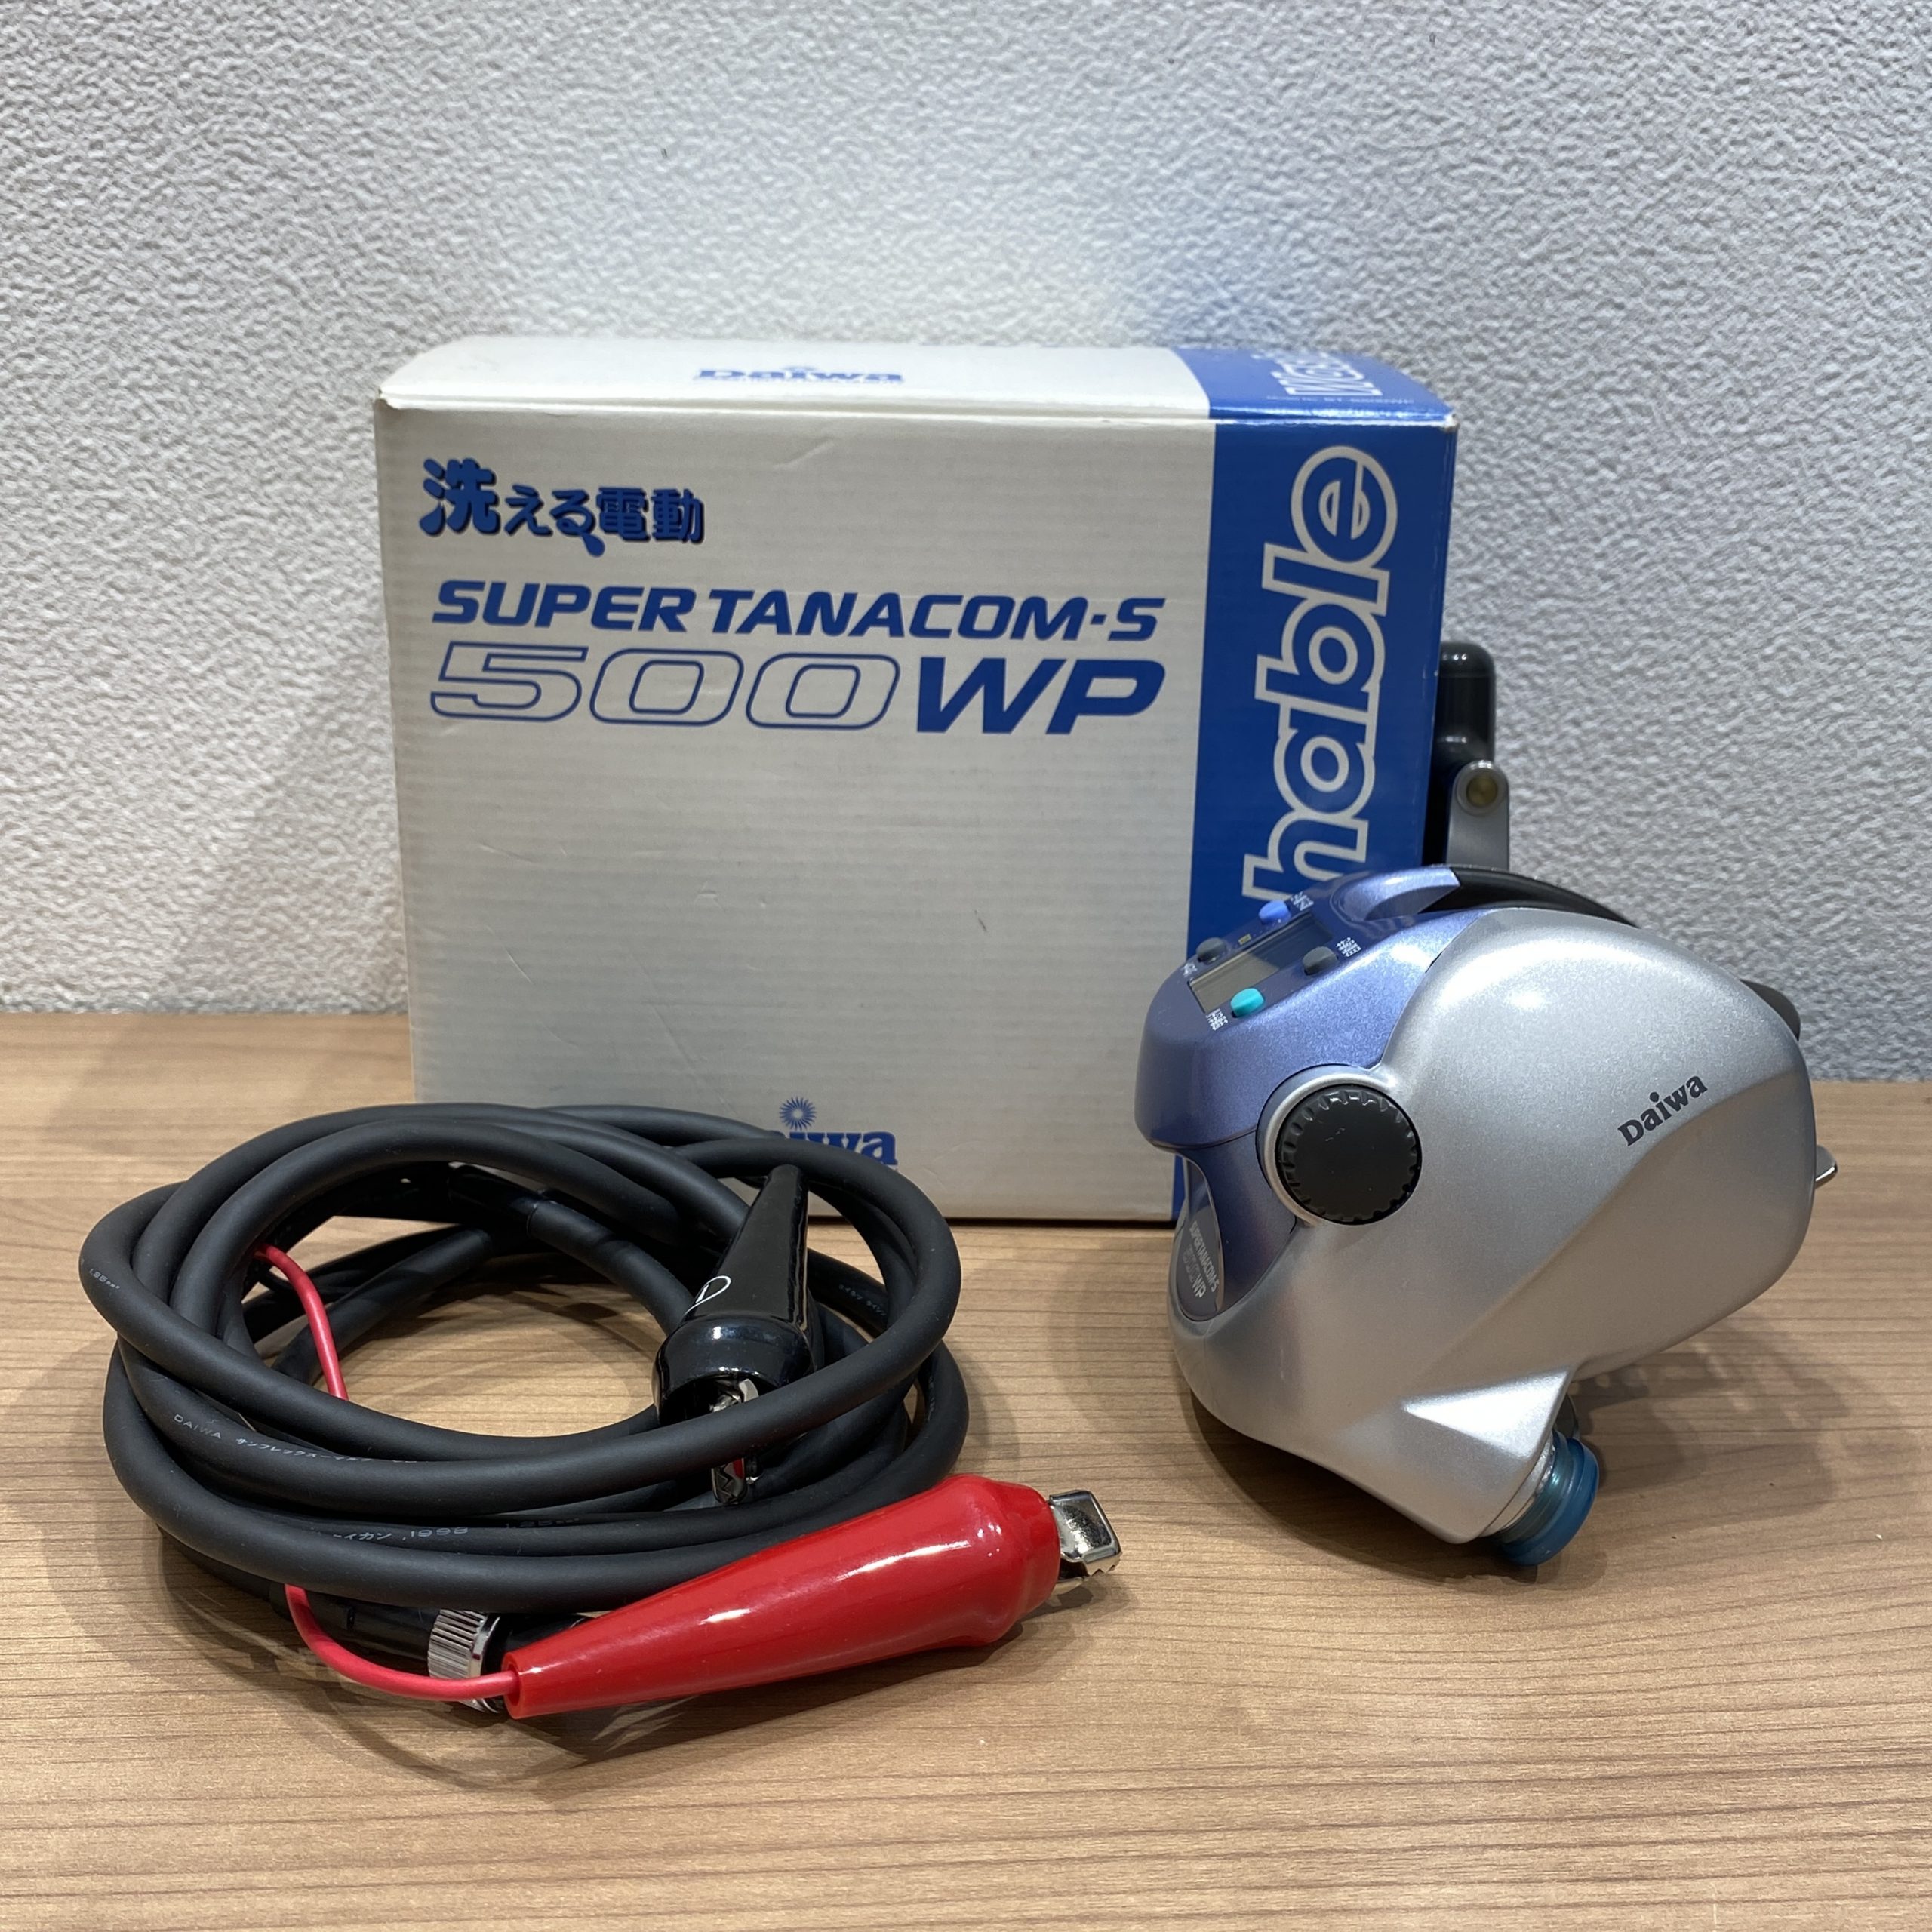 【Daiwa/ダイワ】SUPER TANACOM.S/スーパータナコン 500WP 電動リール 釣り具